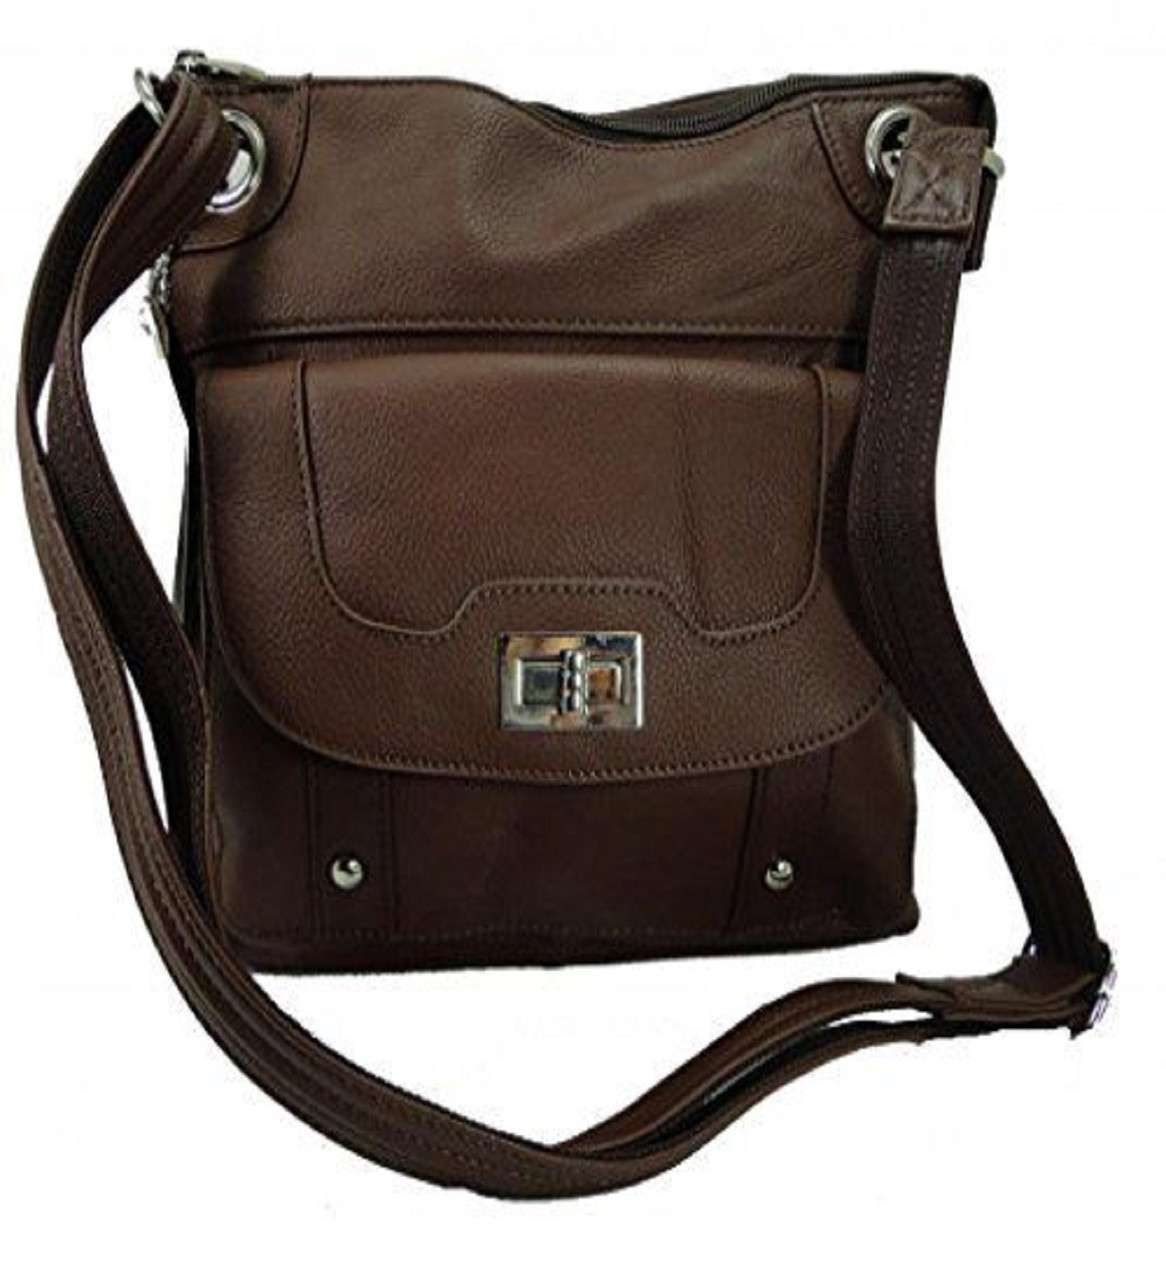 Amazon.com: Crossbody Cell Phone Shoulder Bag, Small Bag for Phone, 6